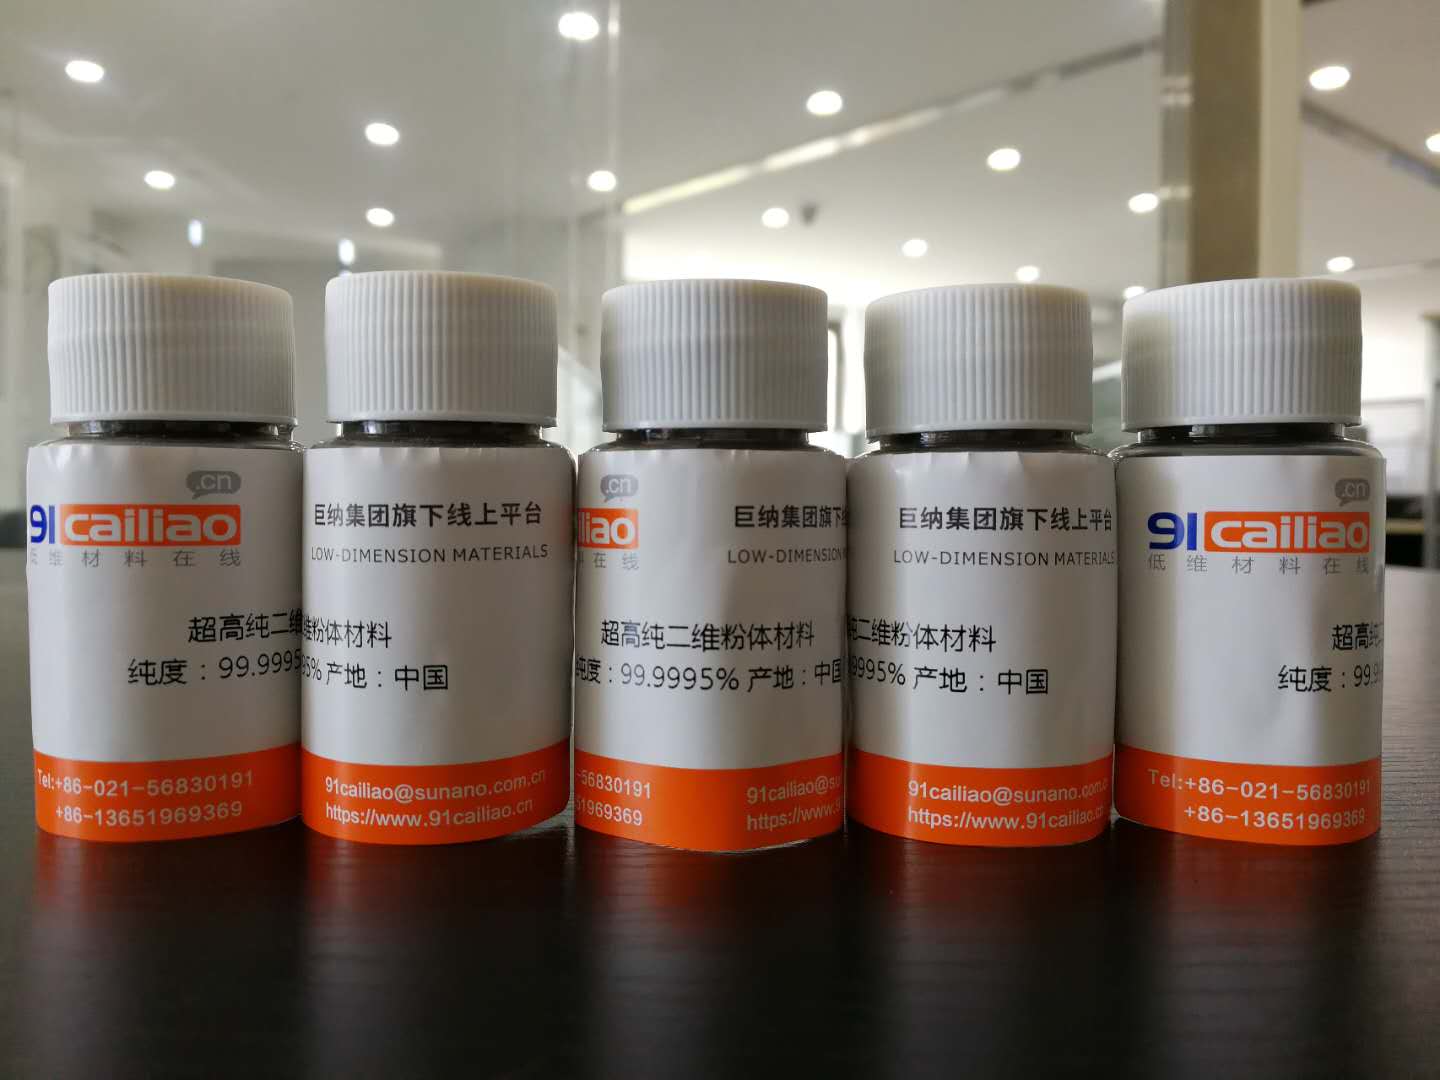 Ultra high pure NbSe2 powder